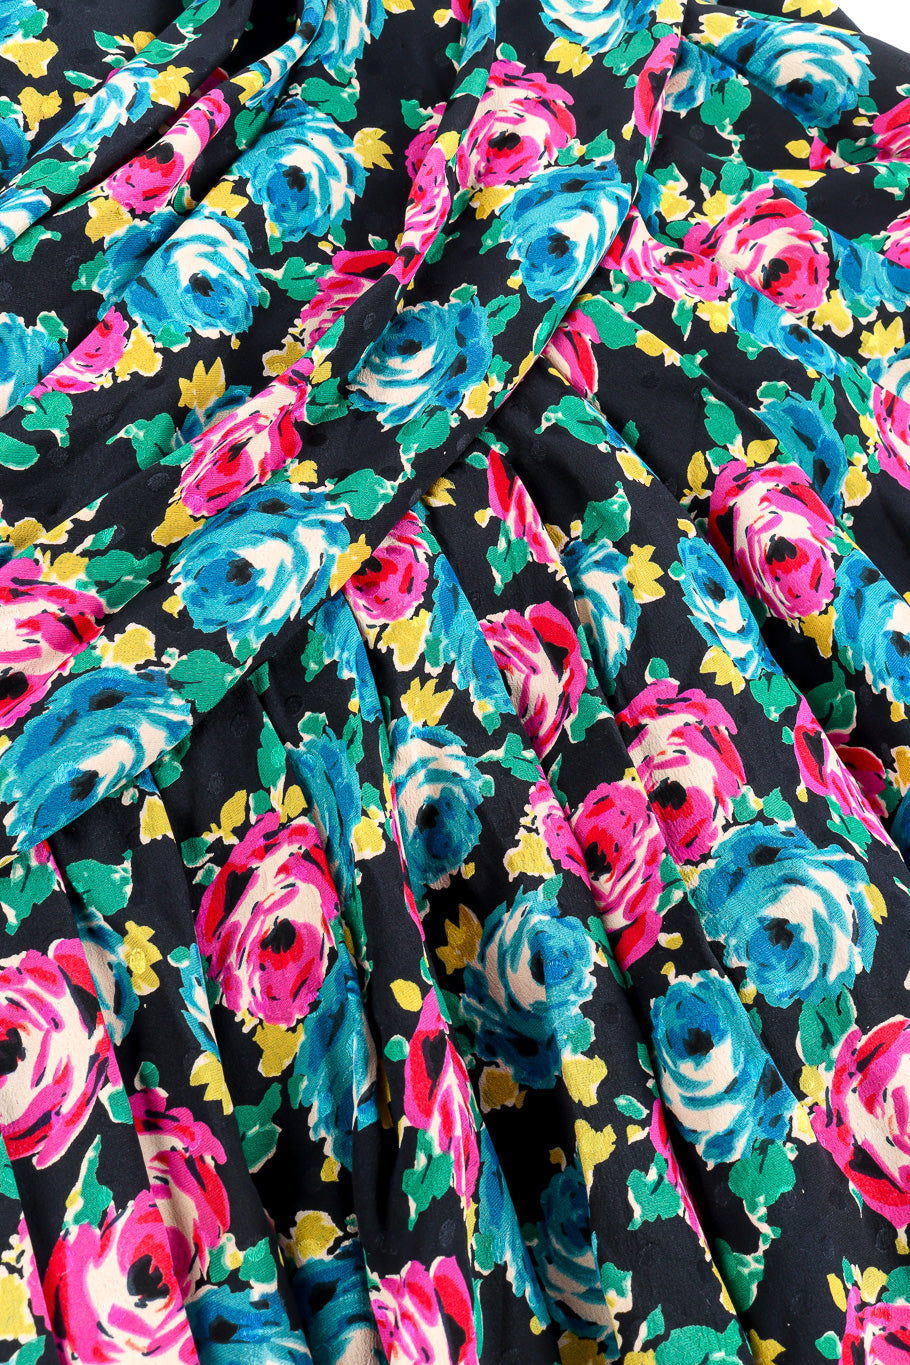 Emanuele Ungaro rose print silk dress fabric detail @recessla